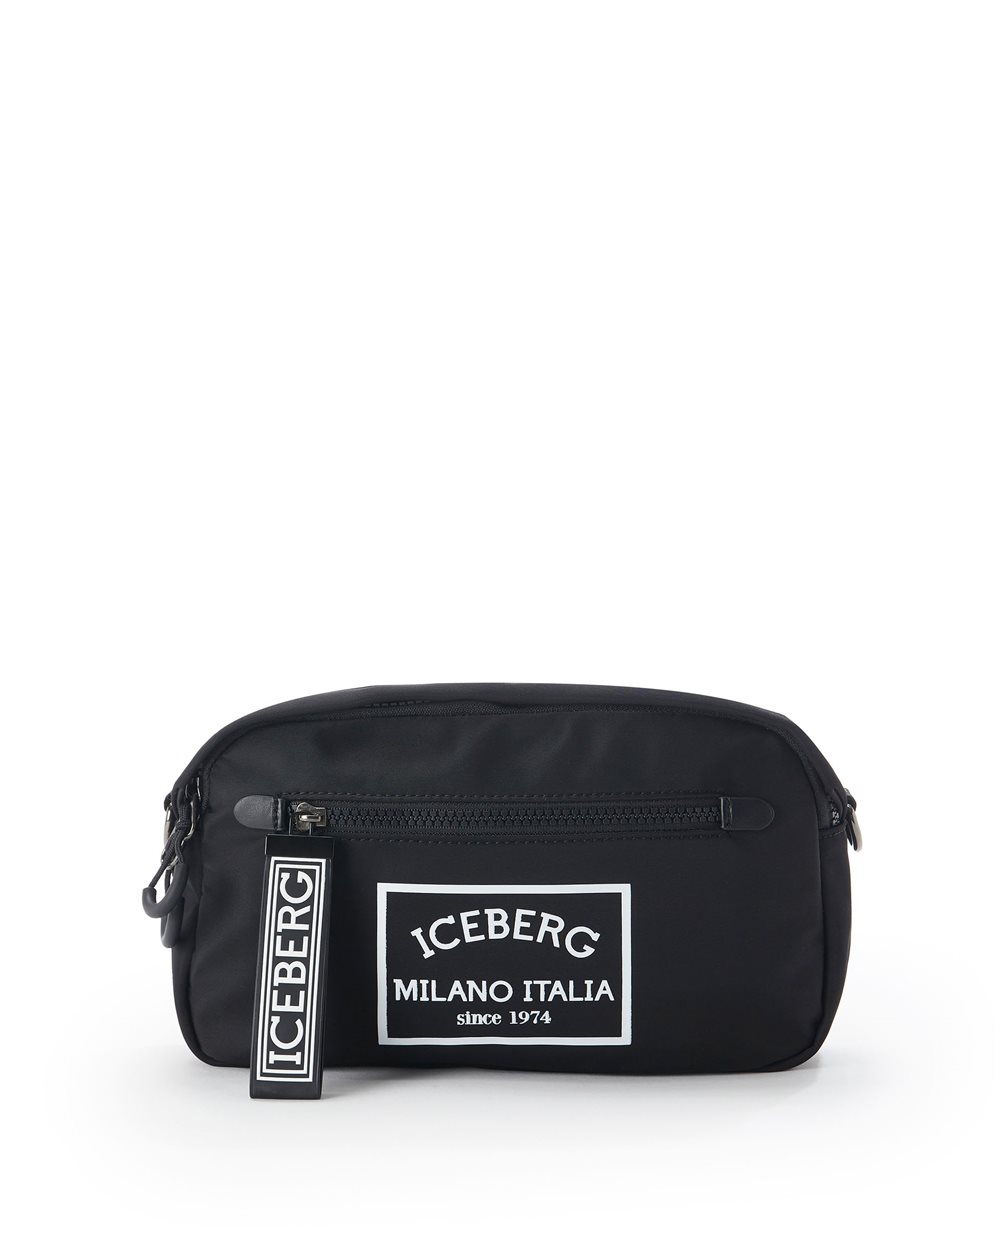 Shoulder bag -  ( SECONDO STEP DE ) PROMO SALDI UP TO 50% | Iceberg - Official Website